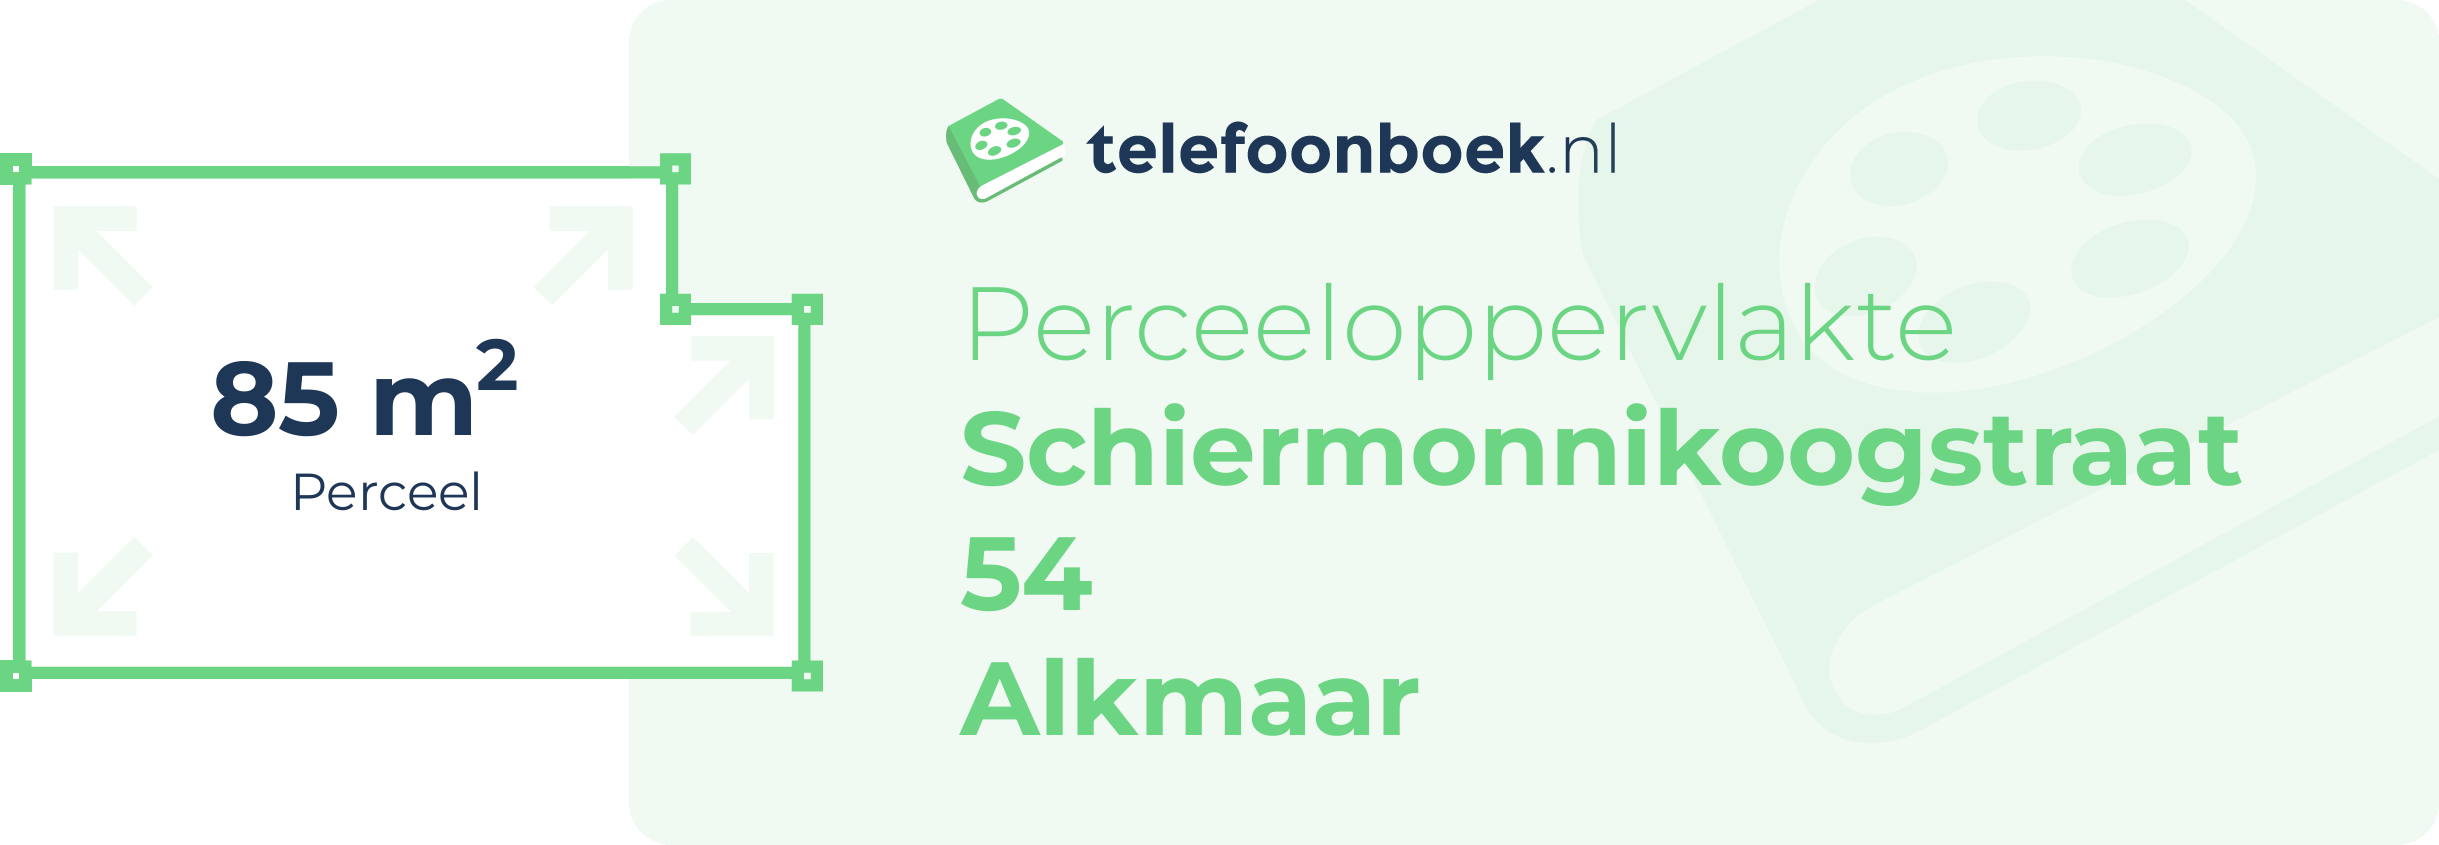 Perceeloppervlakte Schiermonnikoogstraat 54 Alkmaar